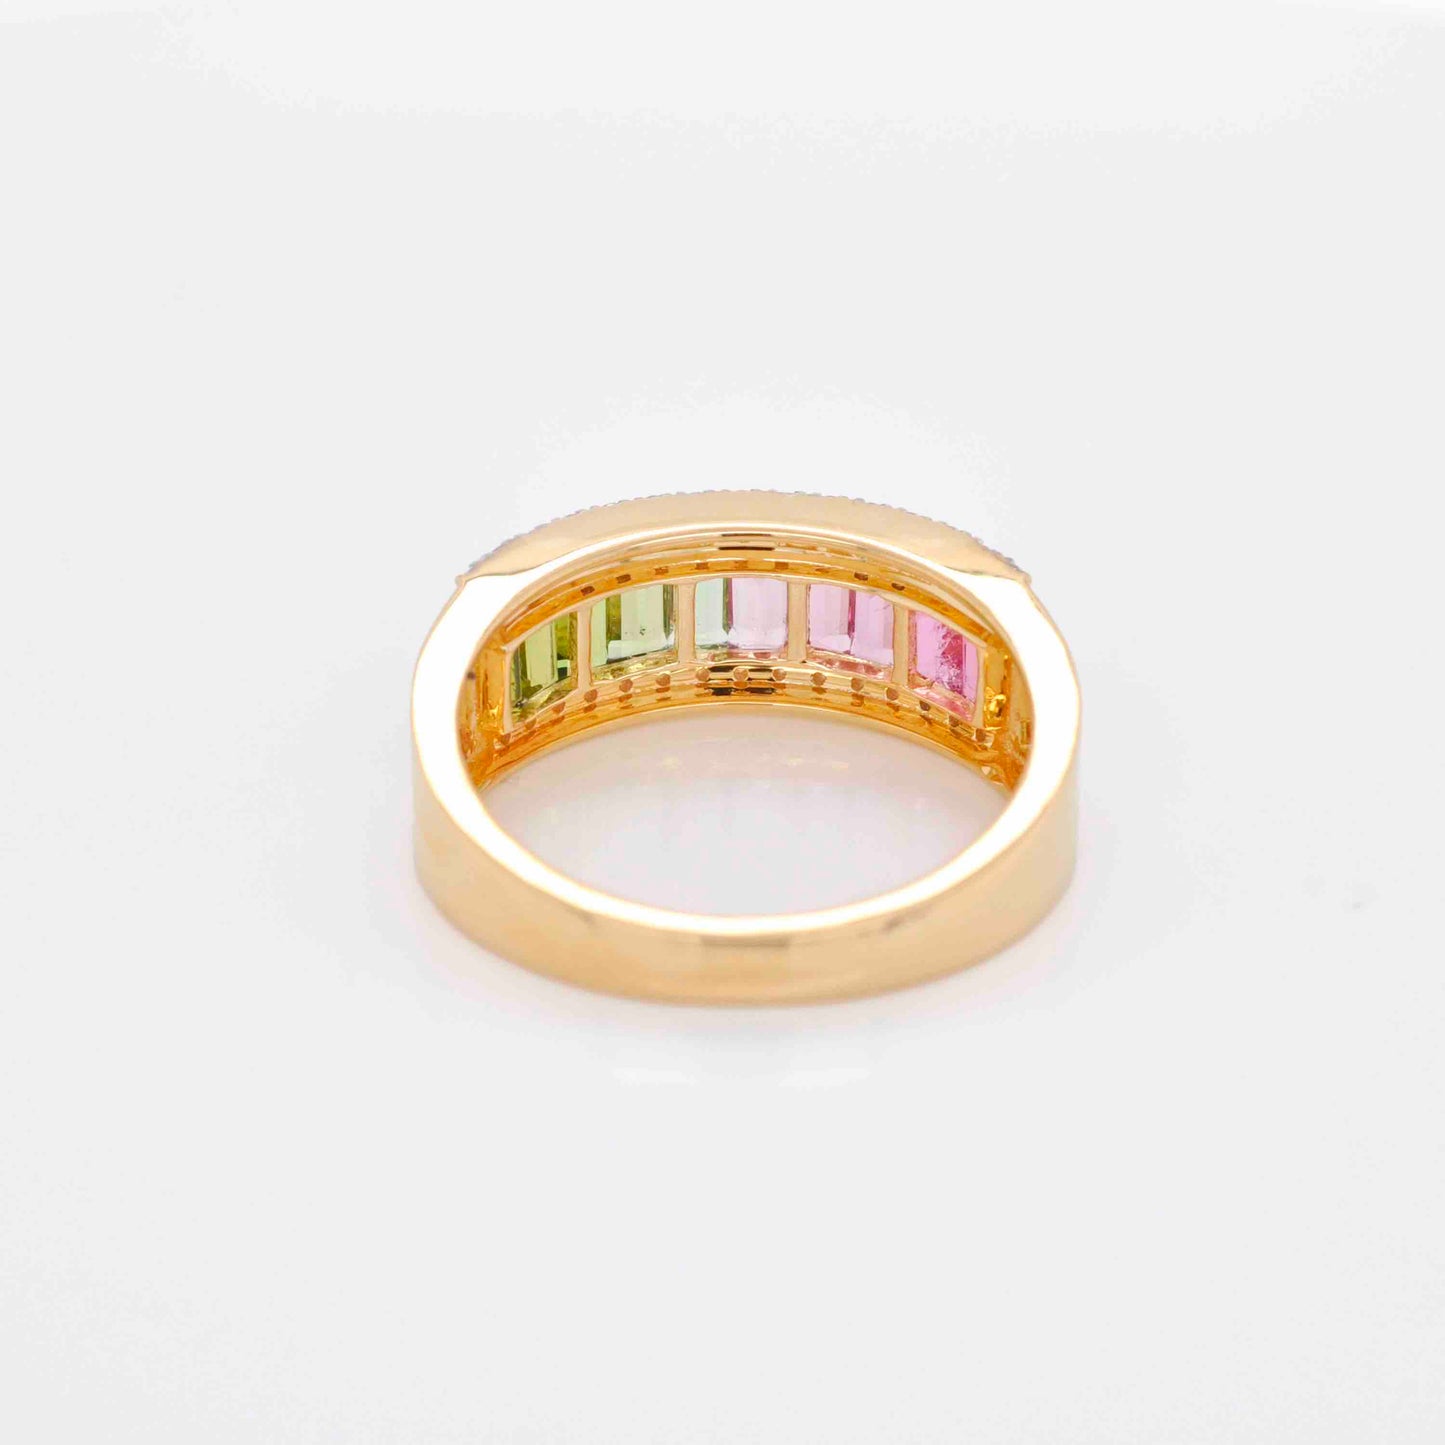 18K Gold Bi Color Tourmaline Diamond Band Ring - Vaibhav Dhadda Jewelry